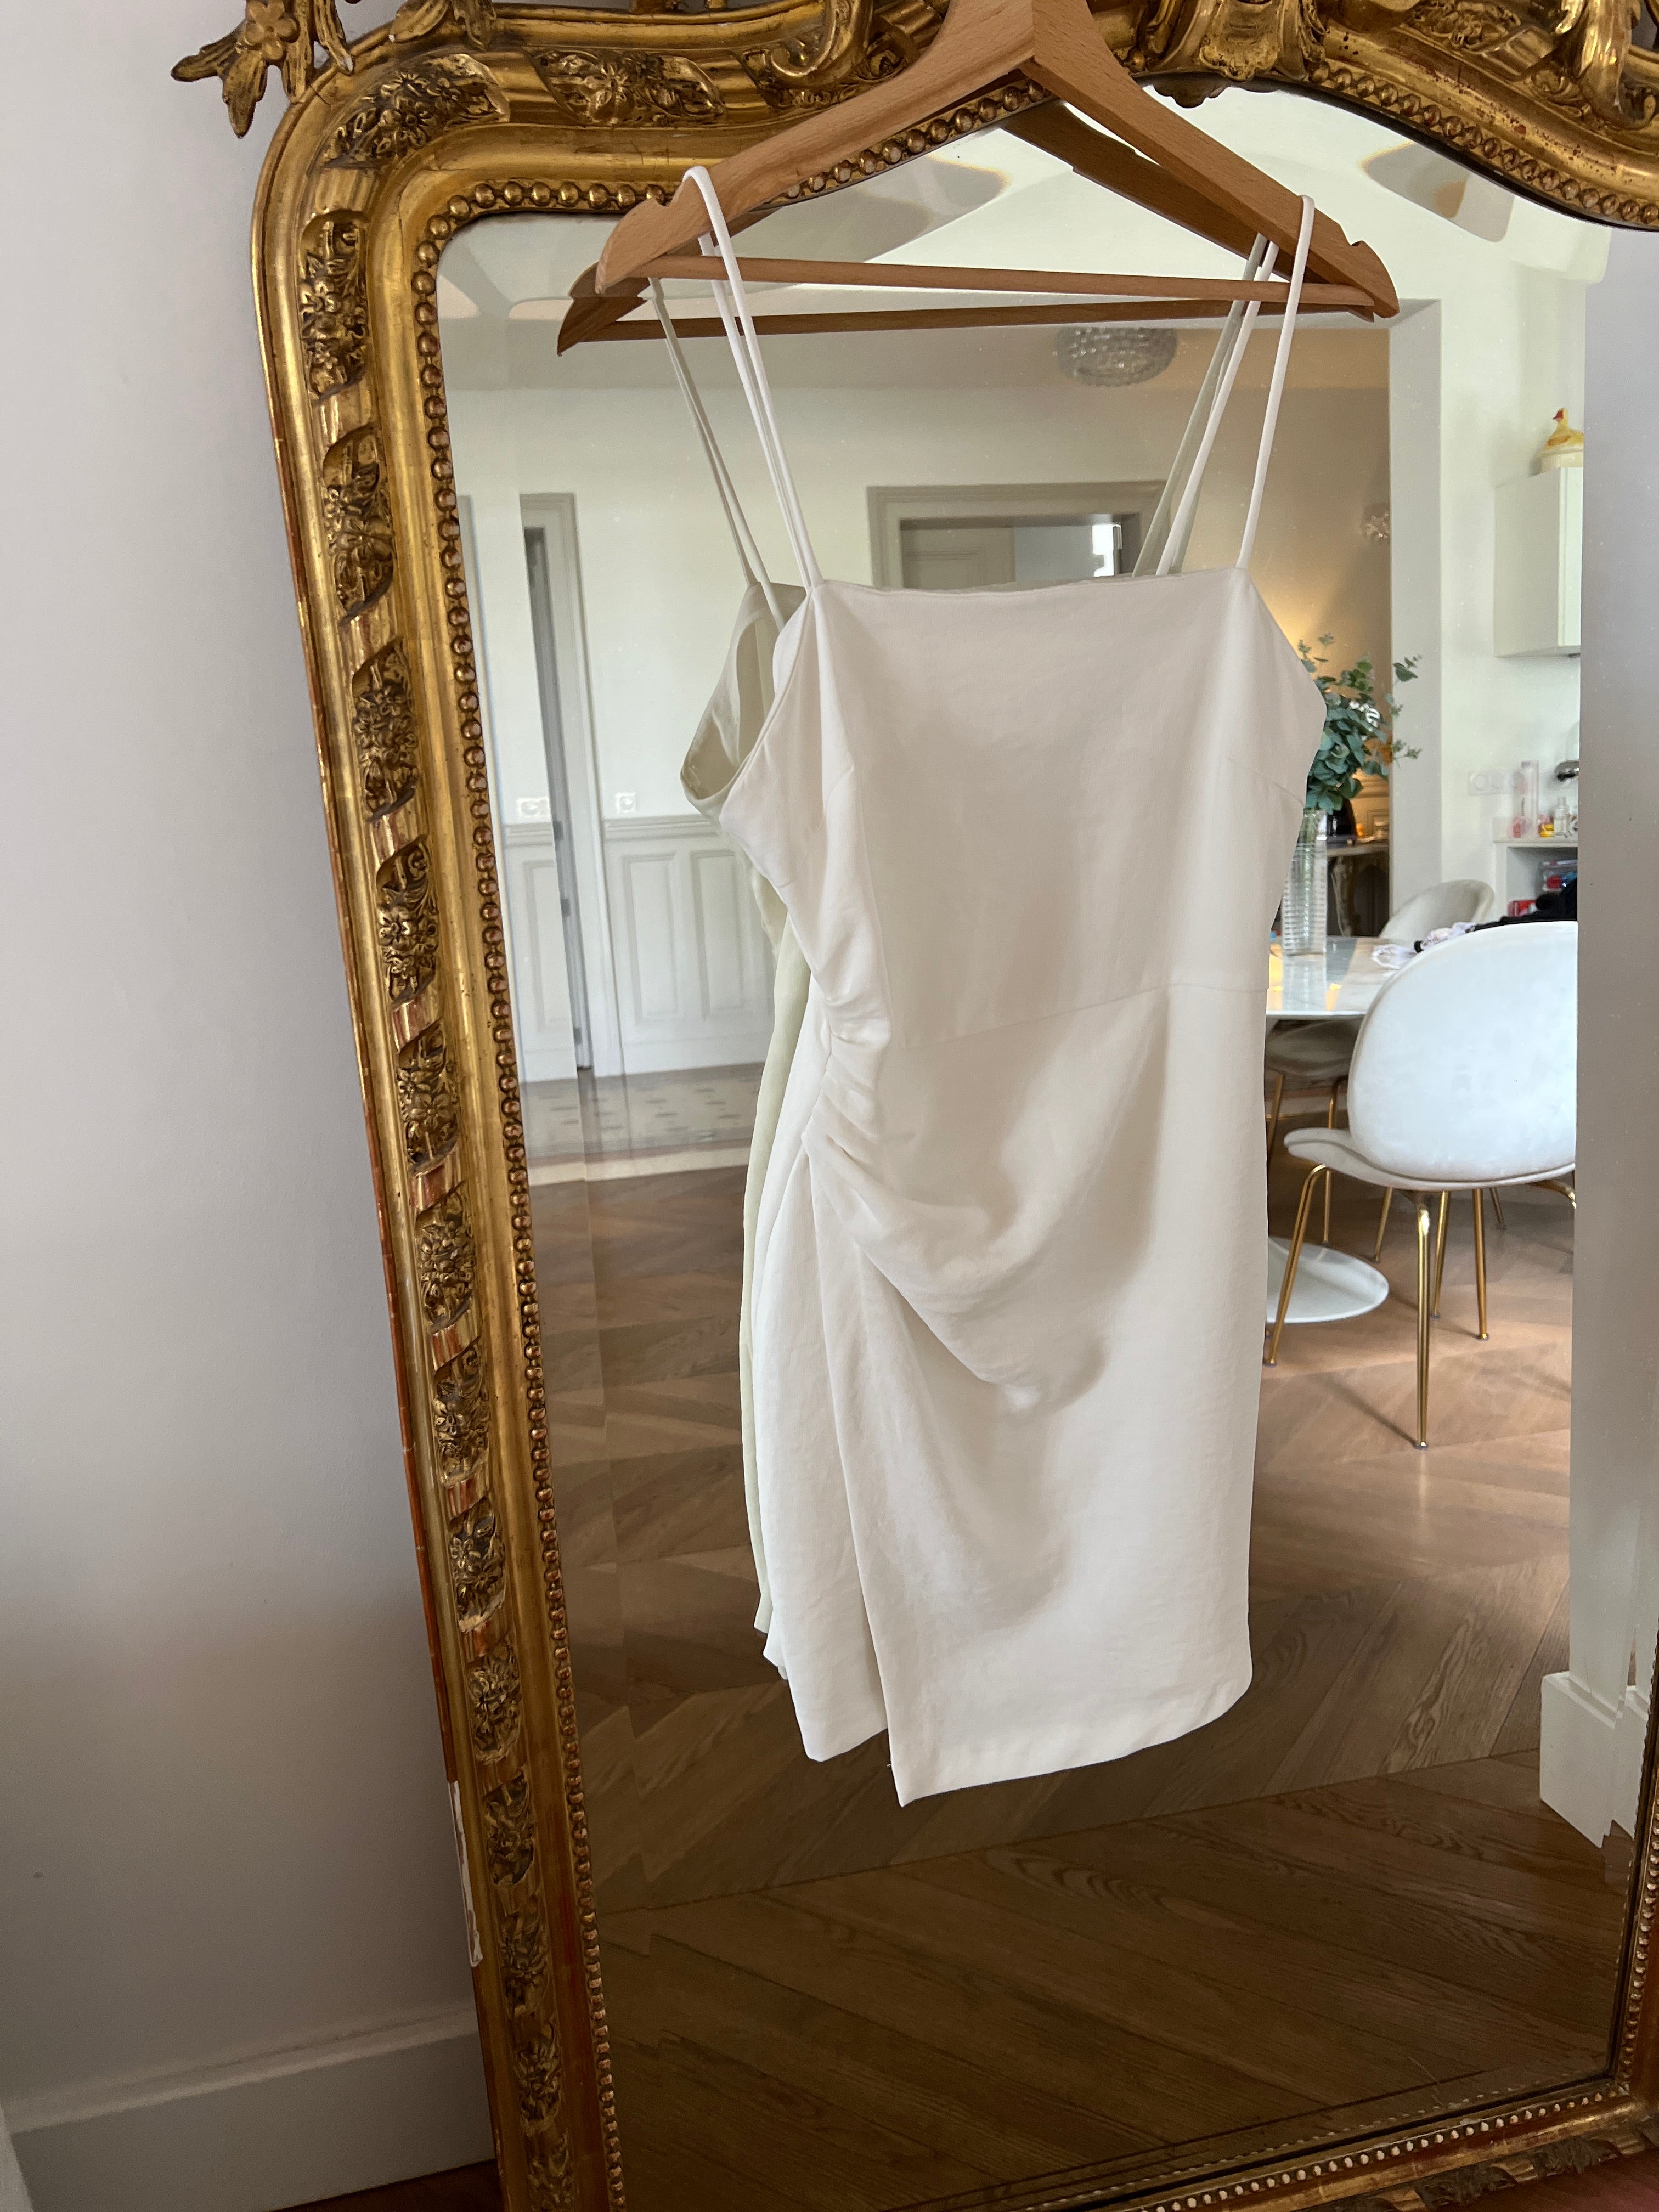 Aurianne Sinacola Robe Zara blanche à bretelles